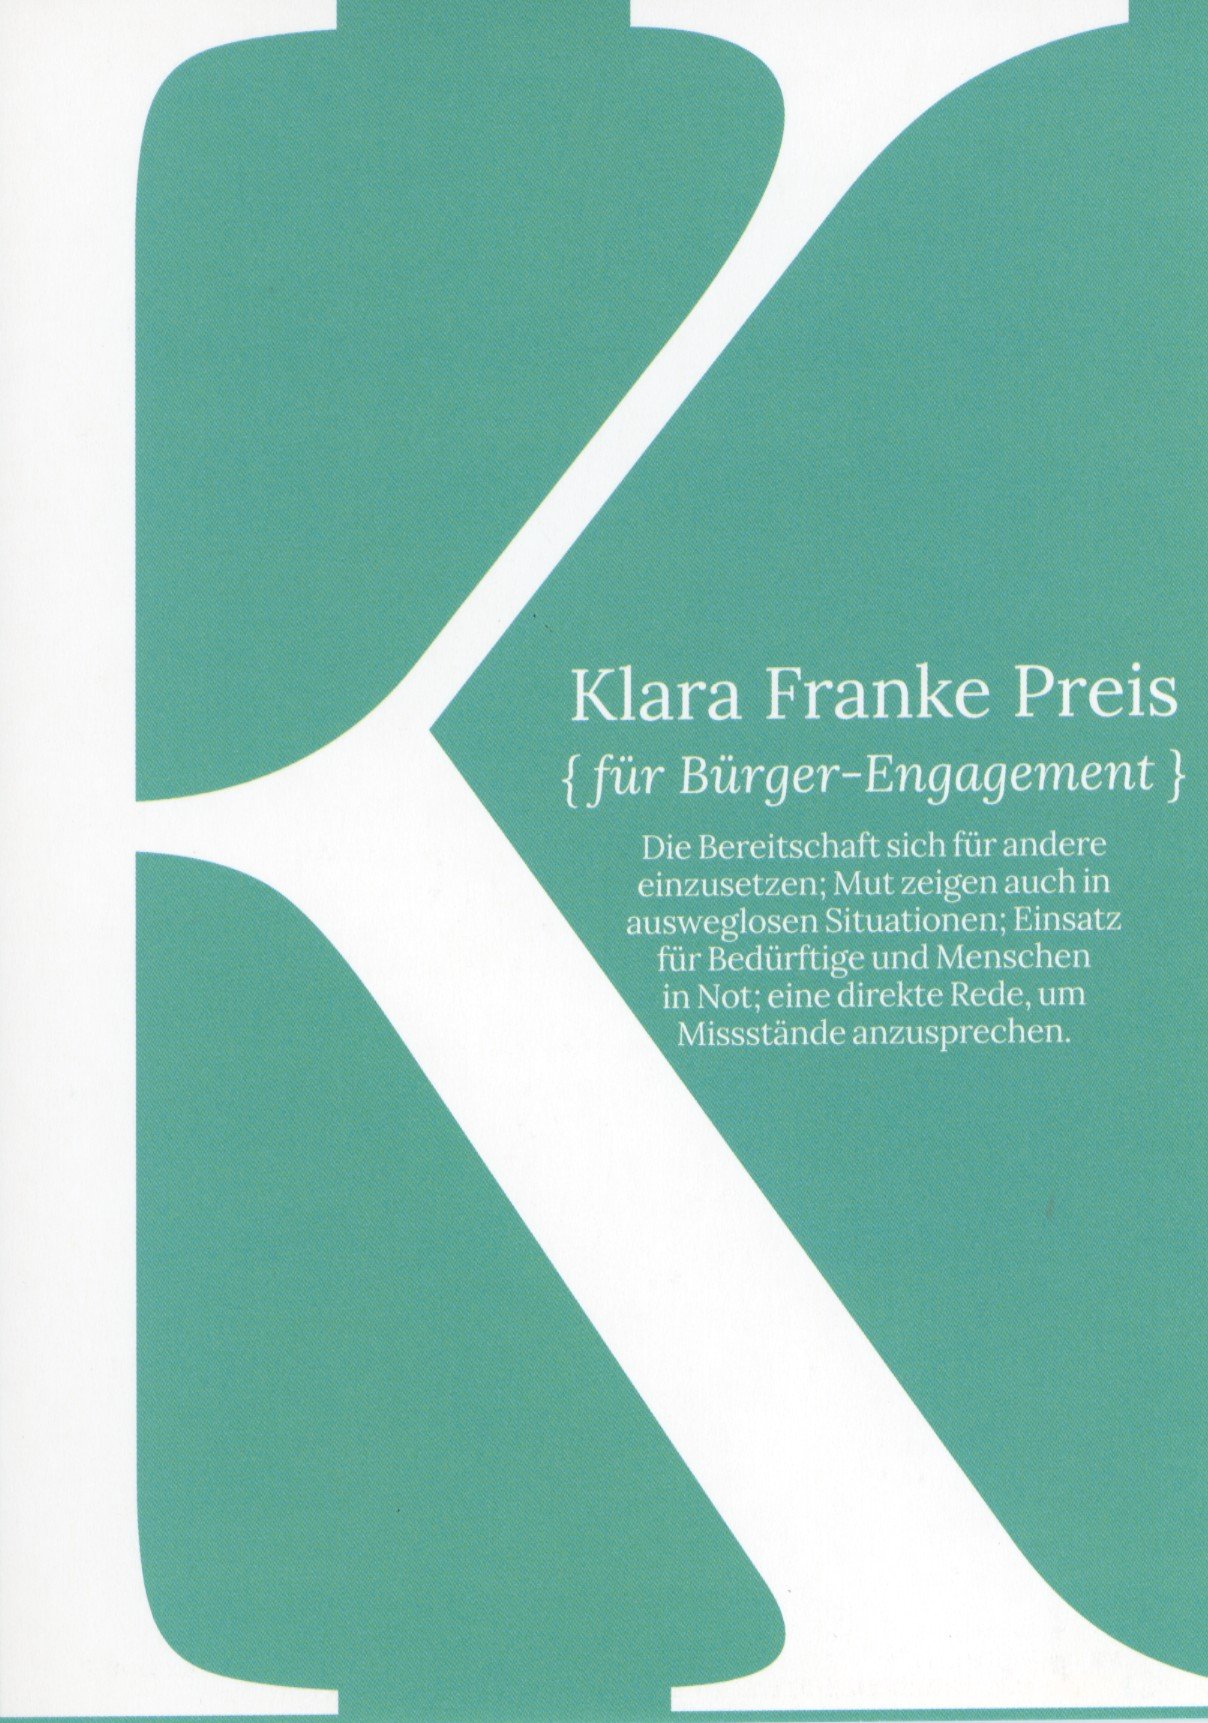 Postkarte zur Klara-Franke-Preisverleihung (B-Laden CC BY-NC-SA)